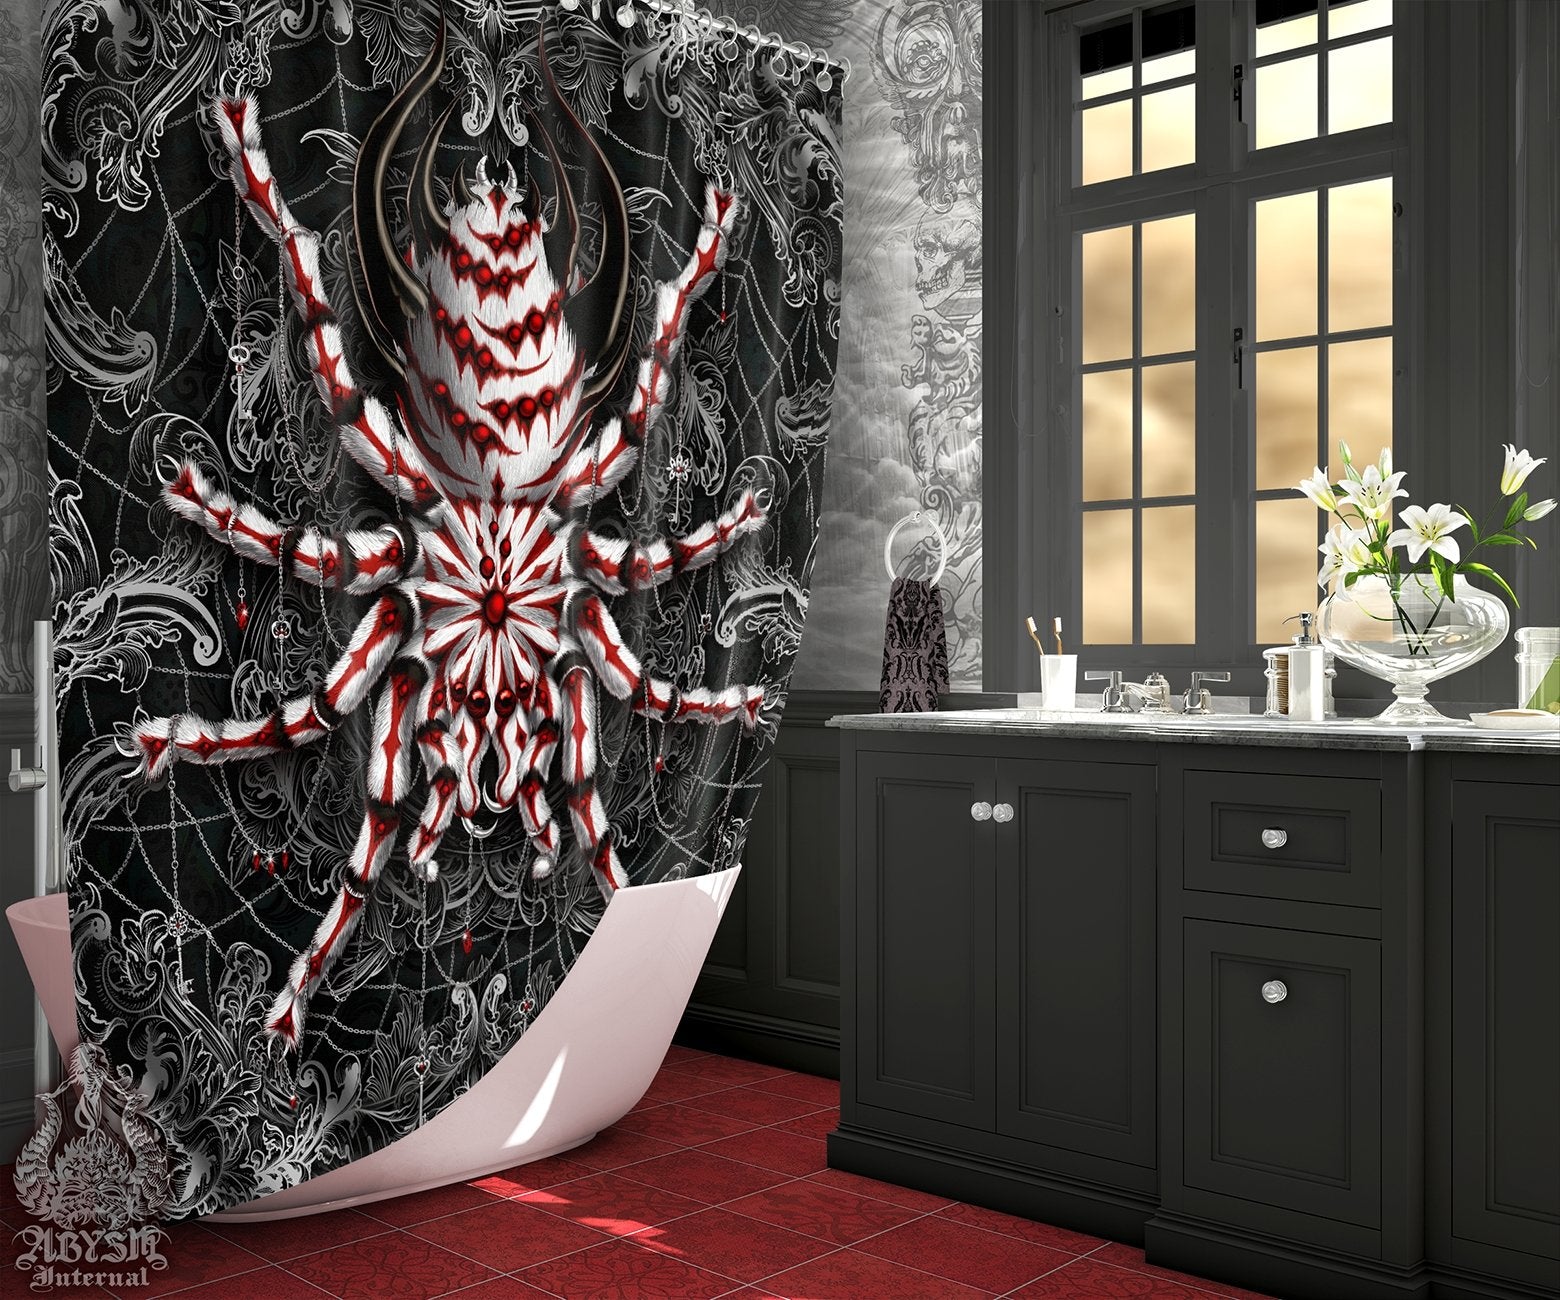 Gothic Shower Curtain, Goth Bathroom Decor, Alternative Home - Spider, Dark, Tarantula Art - Abysm Internal